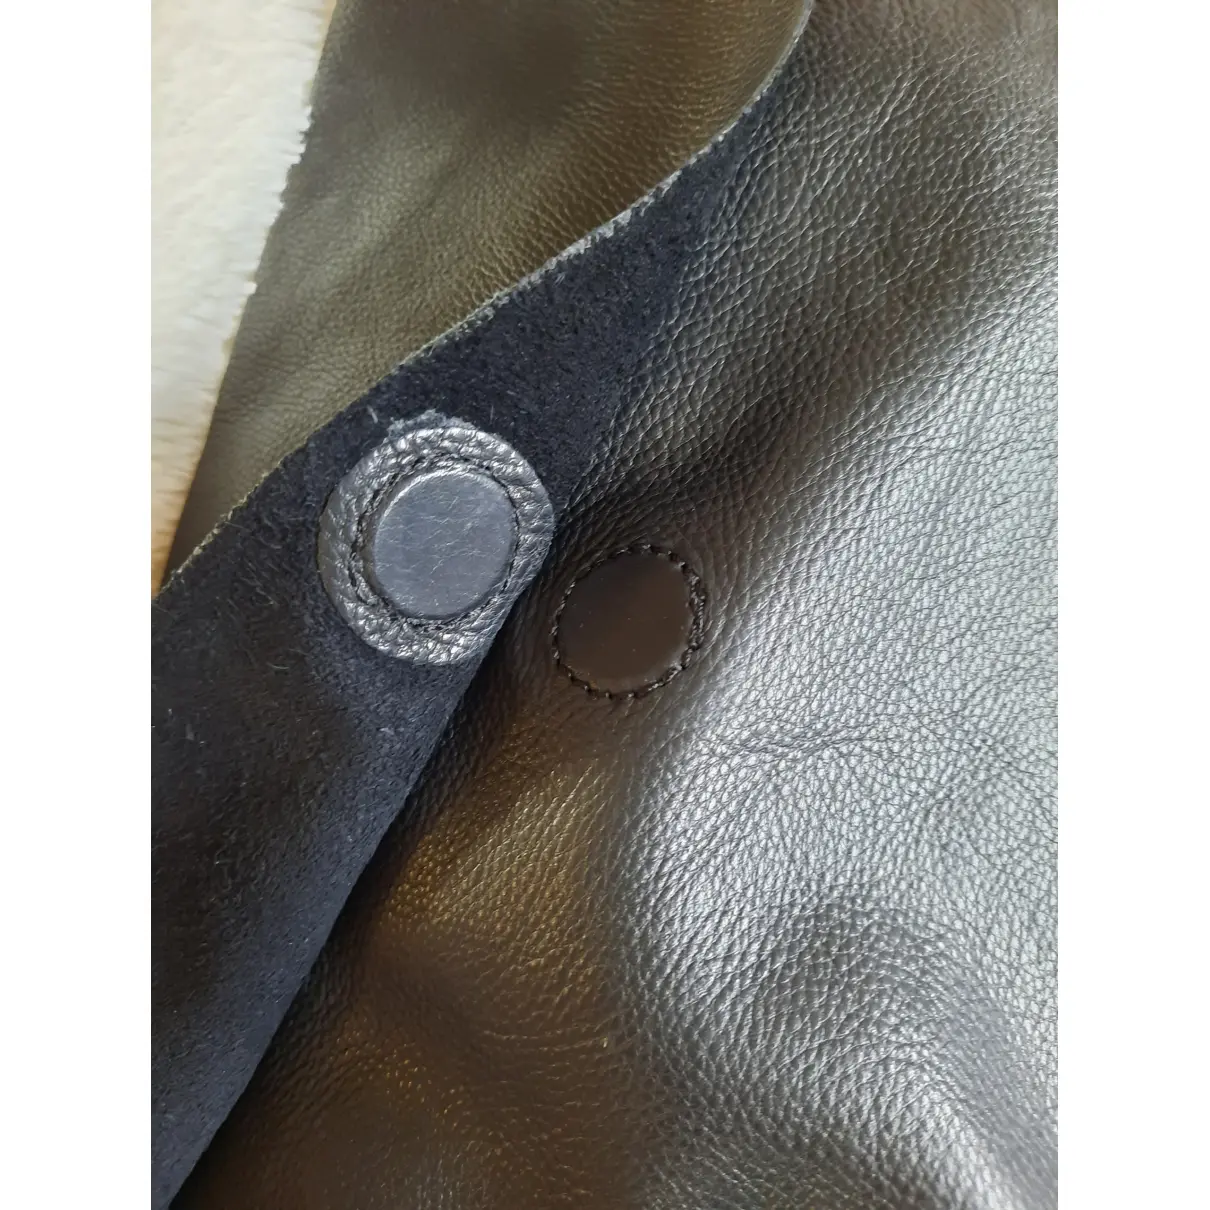 Leather handbag Zara